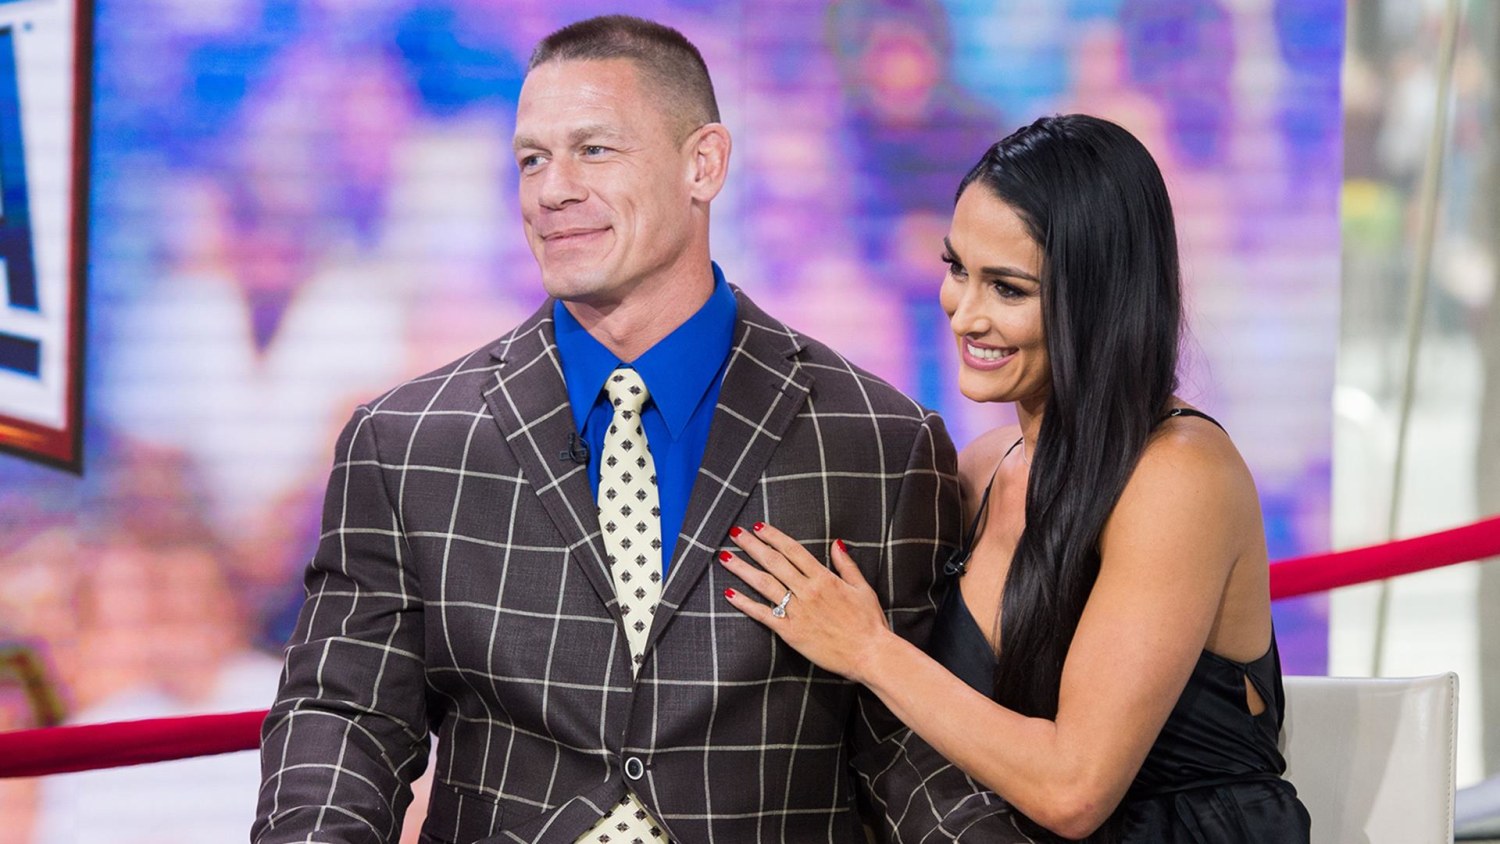 Why did John Cena call off his marriage with Nikki Bella aka Nikki